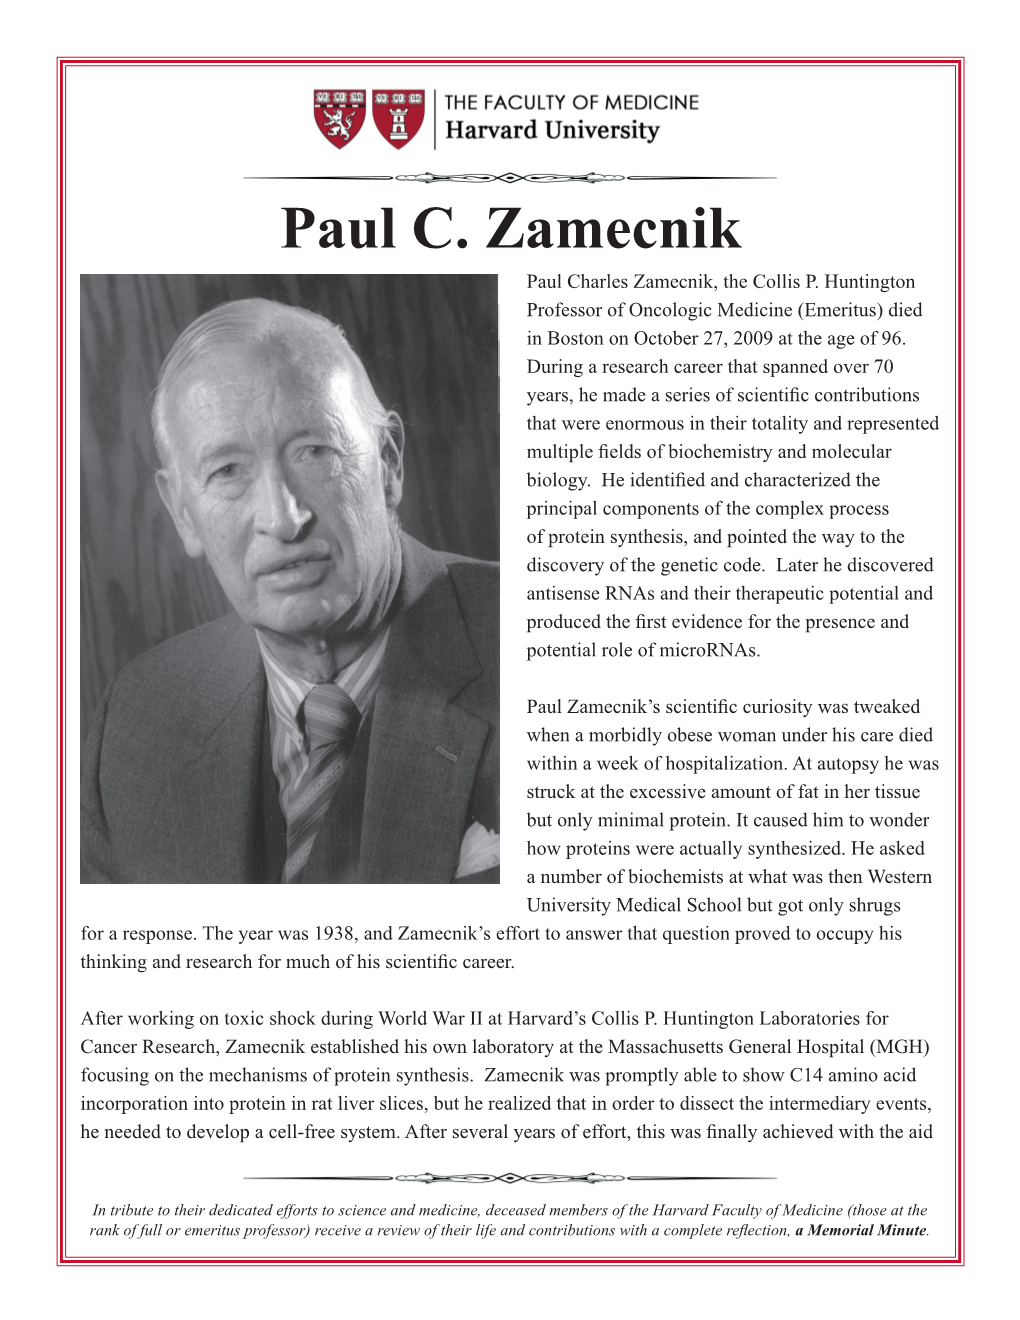 Paul C. Zamecnik Paul Charles Zamecnik, the Collis P